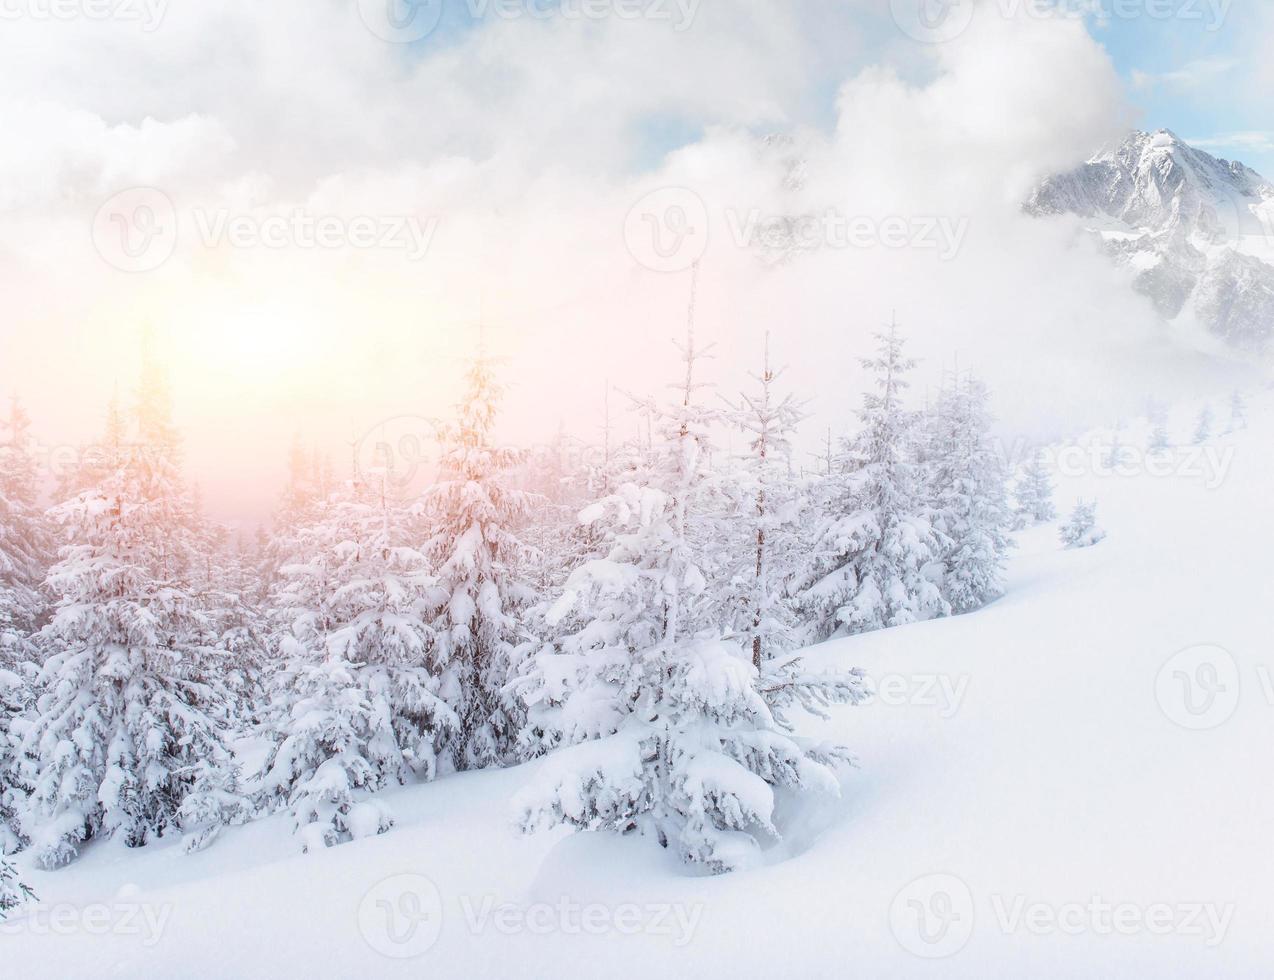 Mysterious winter landscape majestic mountains photo